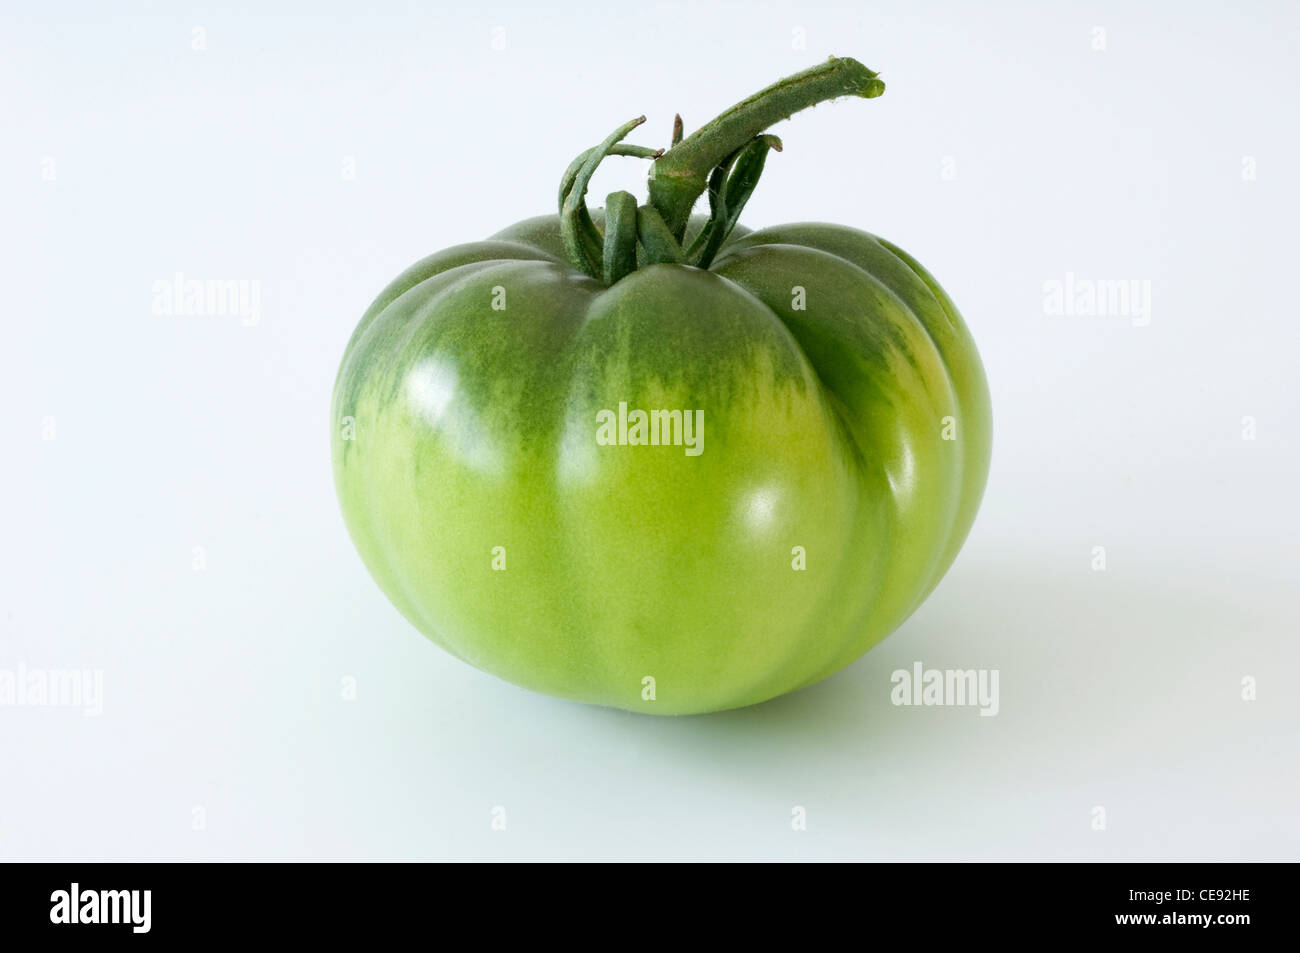 Tomato (Lycopersicon esculentum), green fruit. Studio picture against a white background. Stock Photo